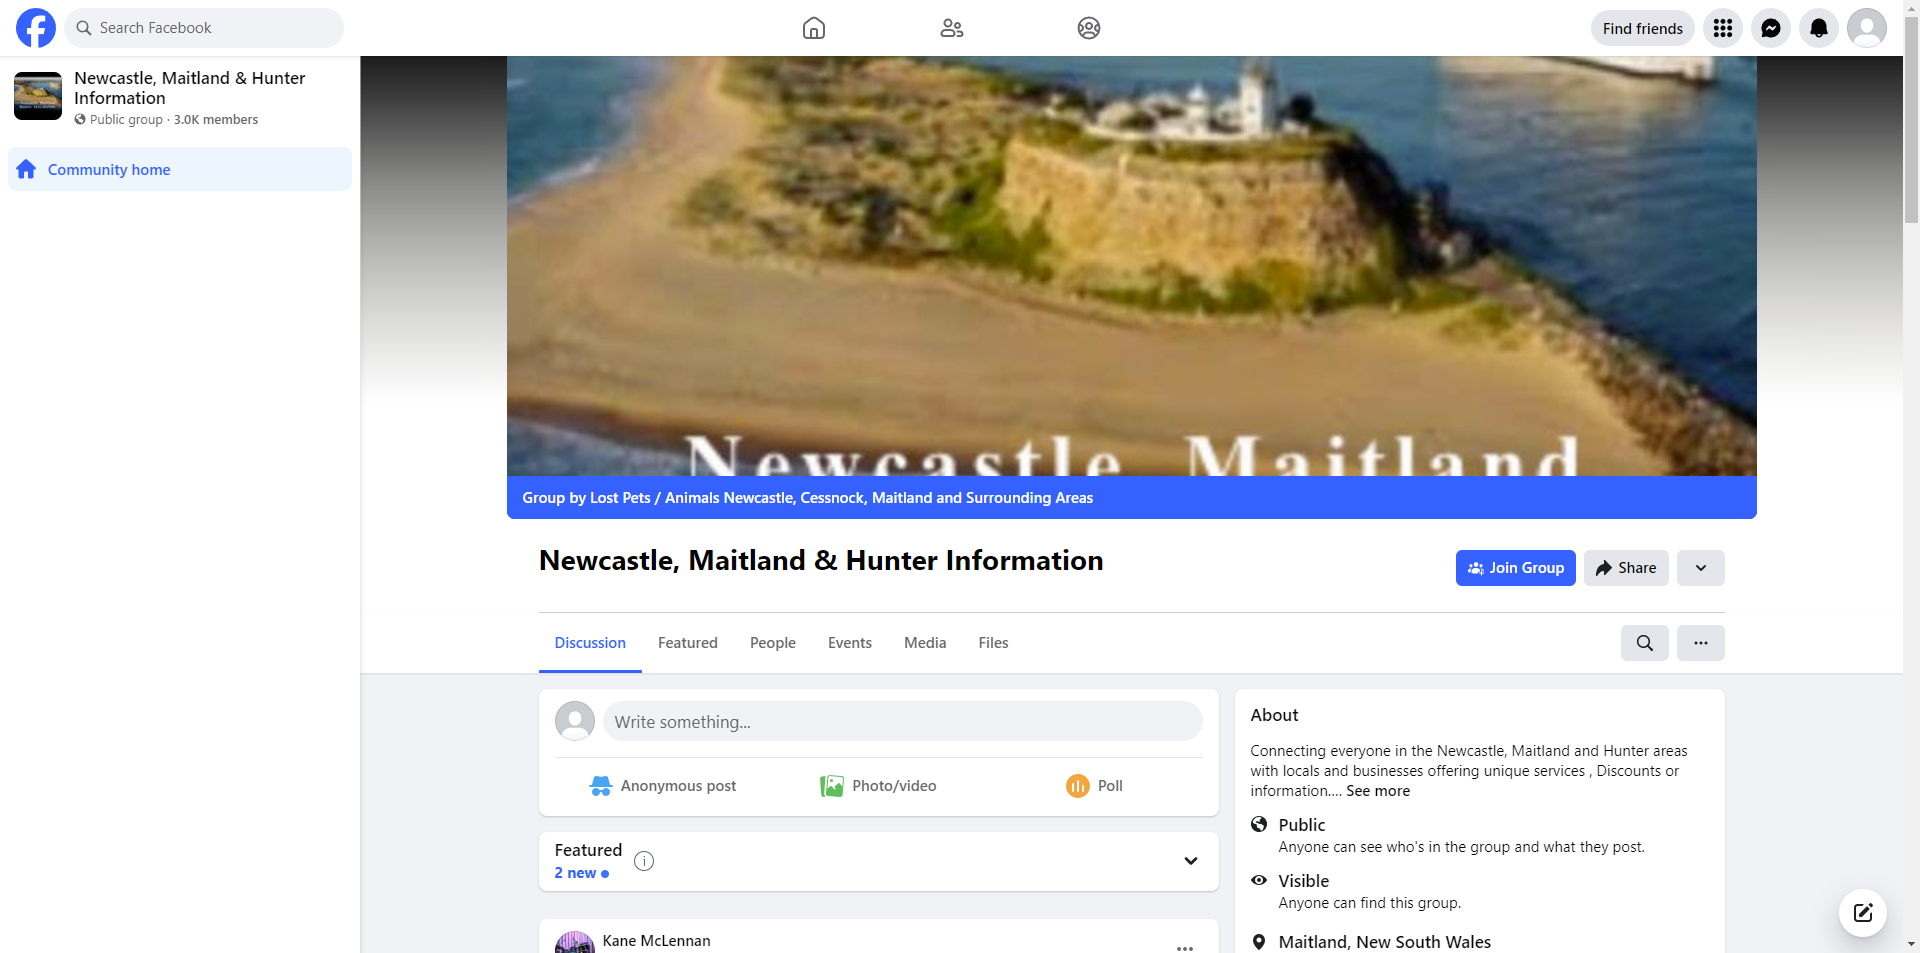 Newcastle, Maitland & Hunter Information